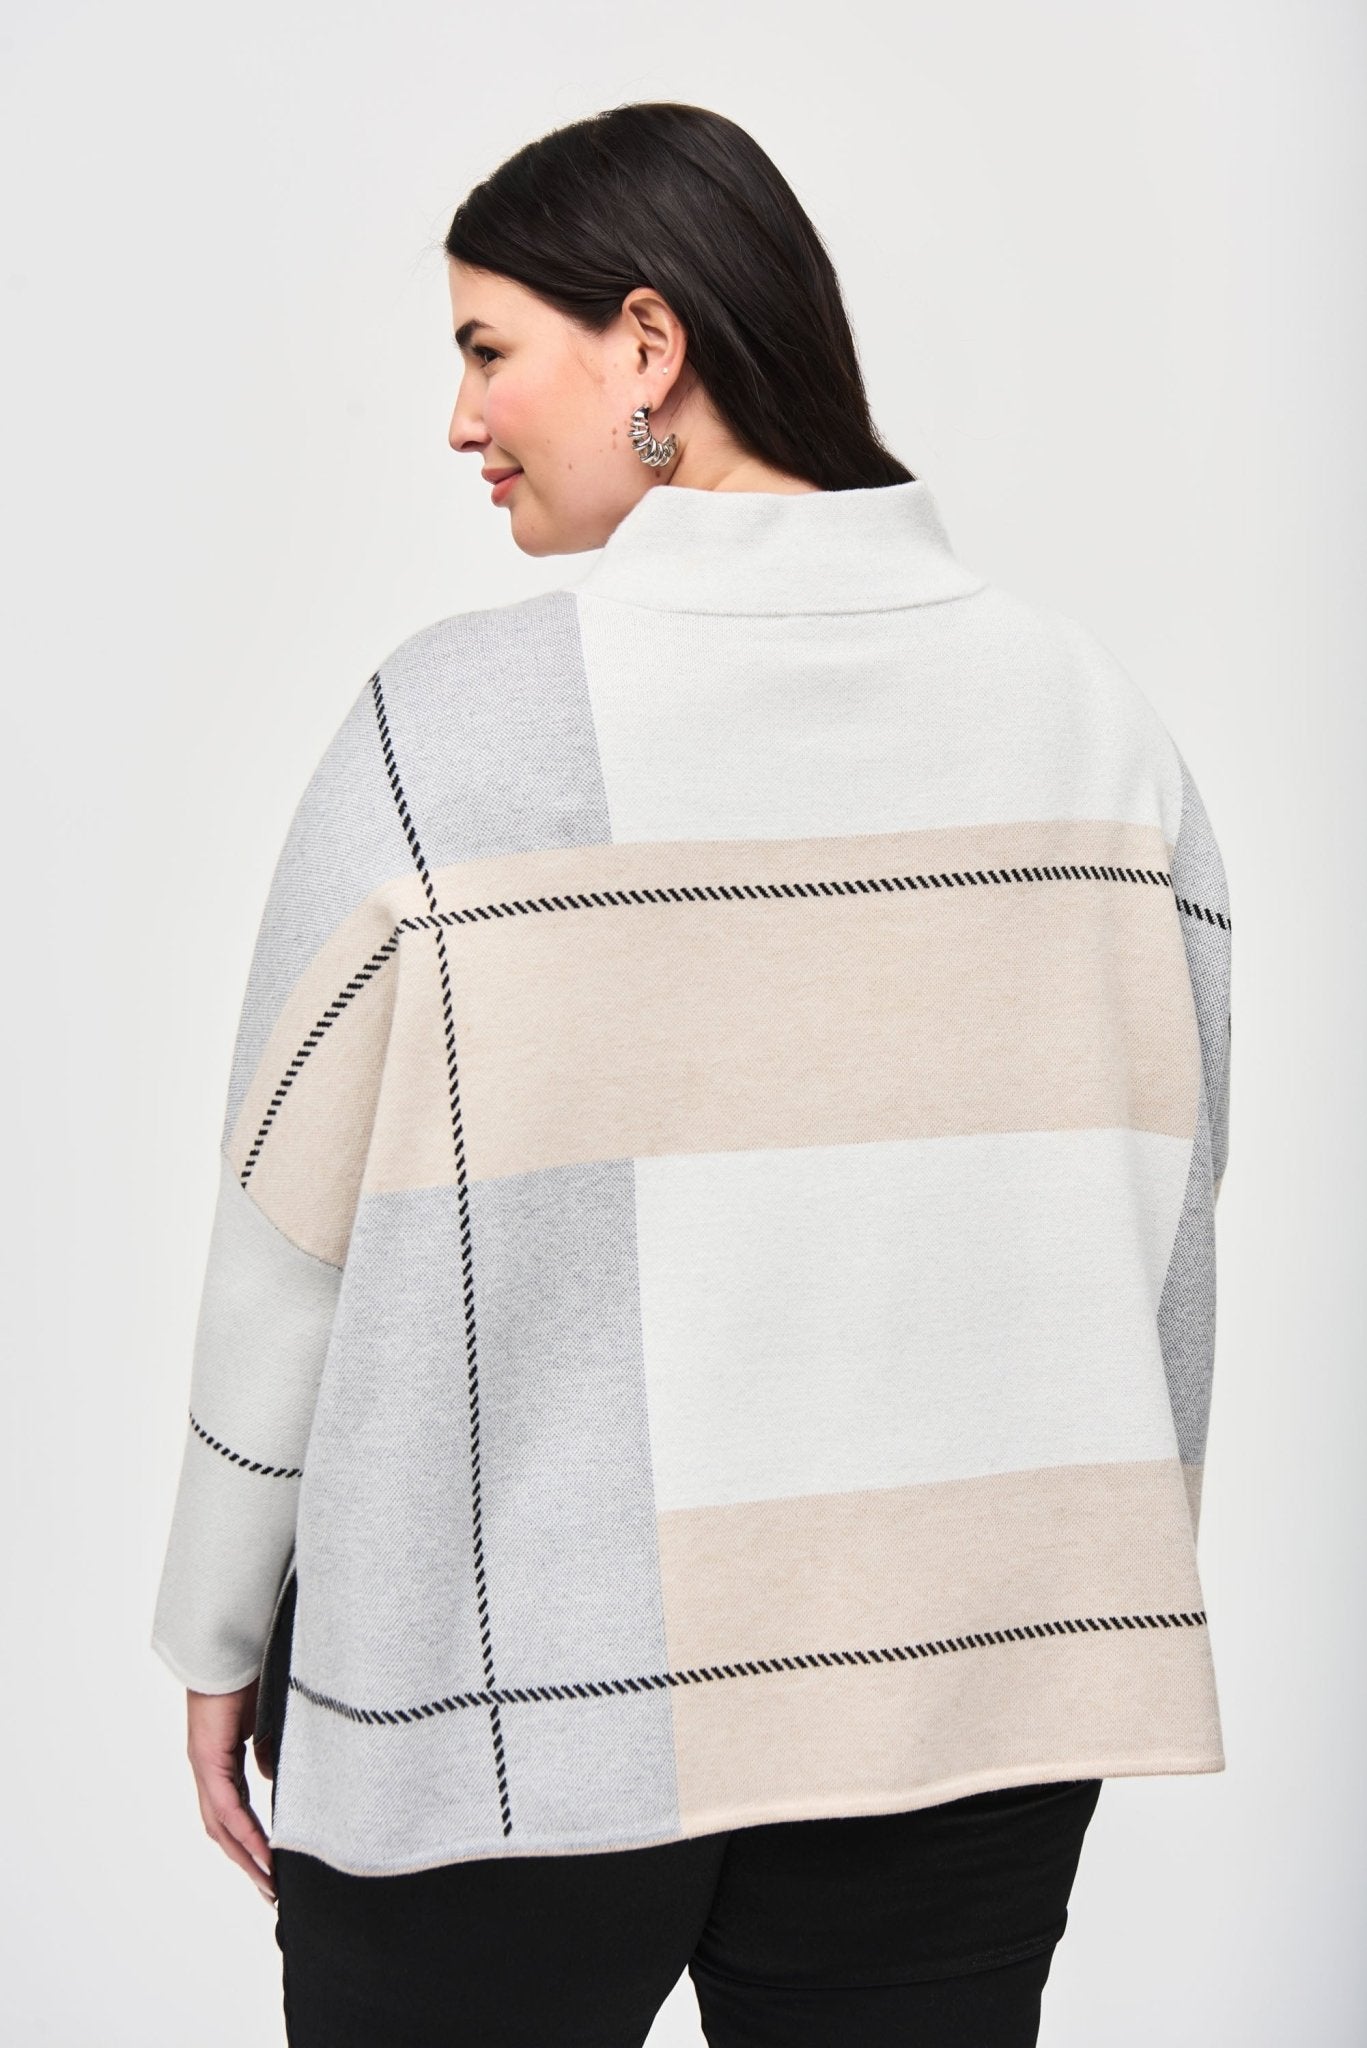 Shop PRE-ORDER Color-Block Jacquard Knit Cover-Up Style 243952│ Vanilla/Oatmeal/Grey - Joseph Ribkoff